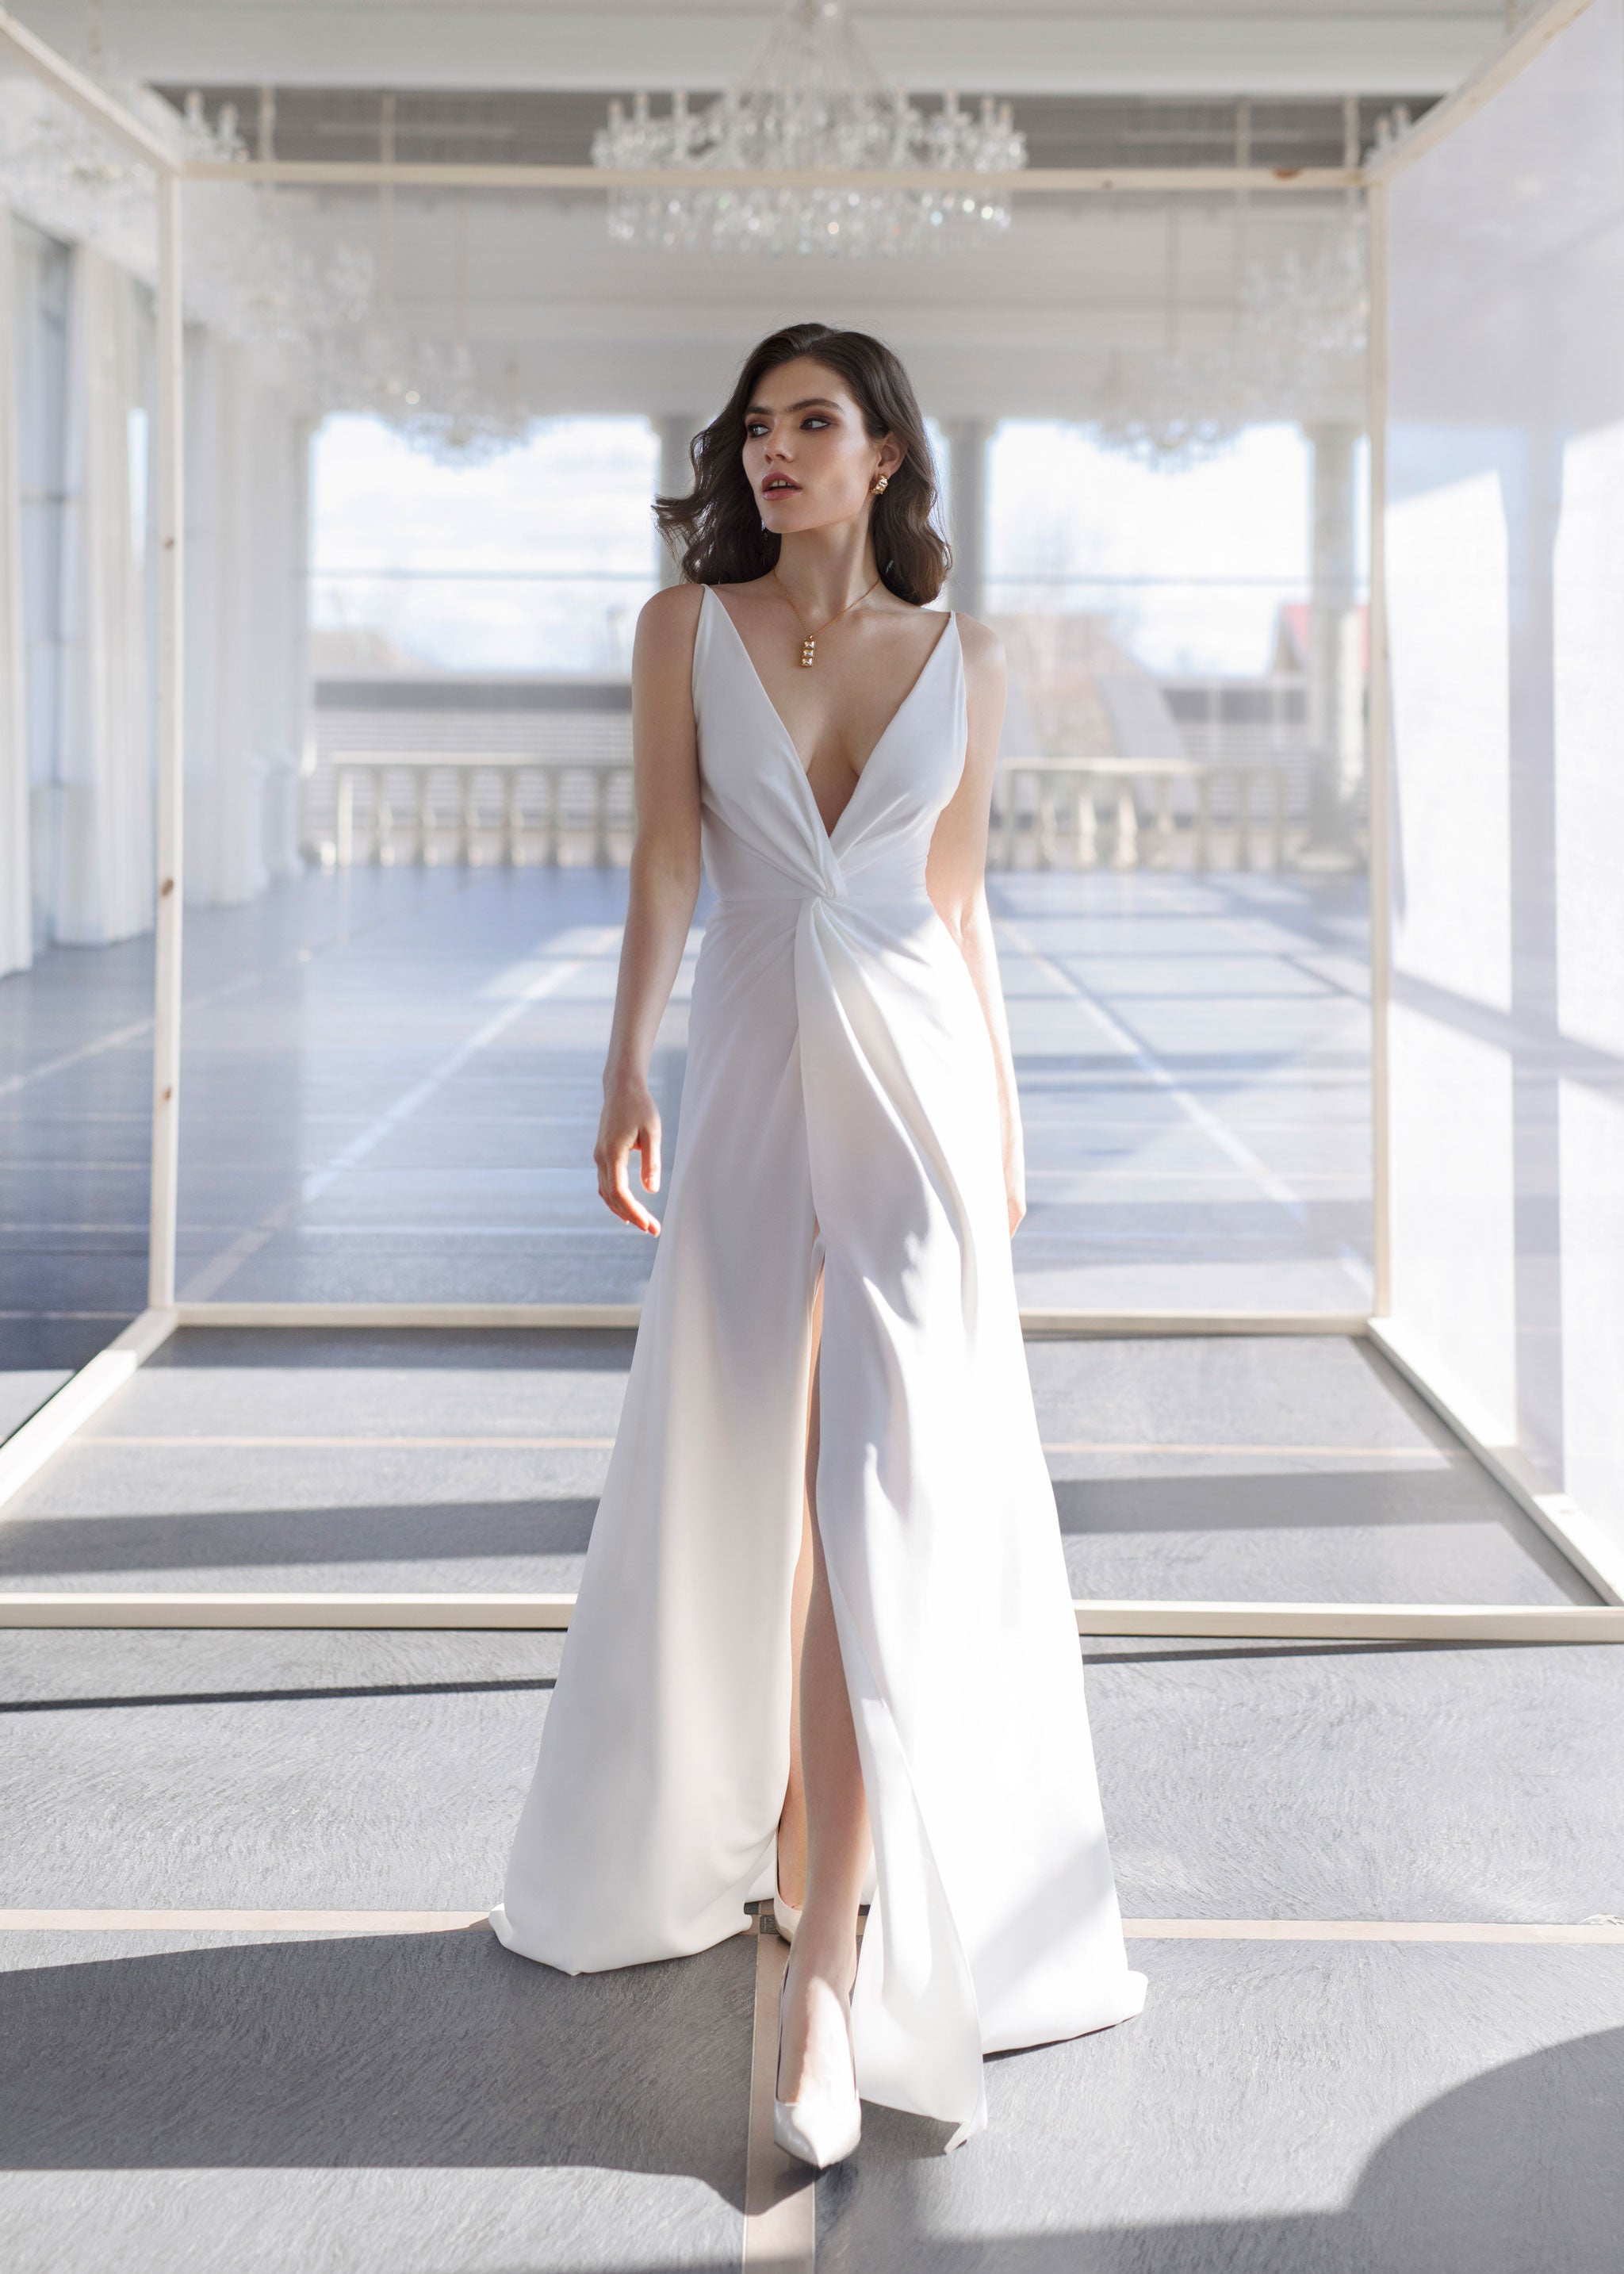 RIMA light wedding dress – I SWEAR YOU